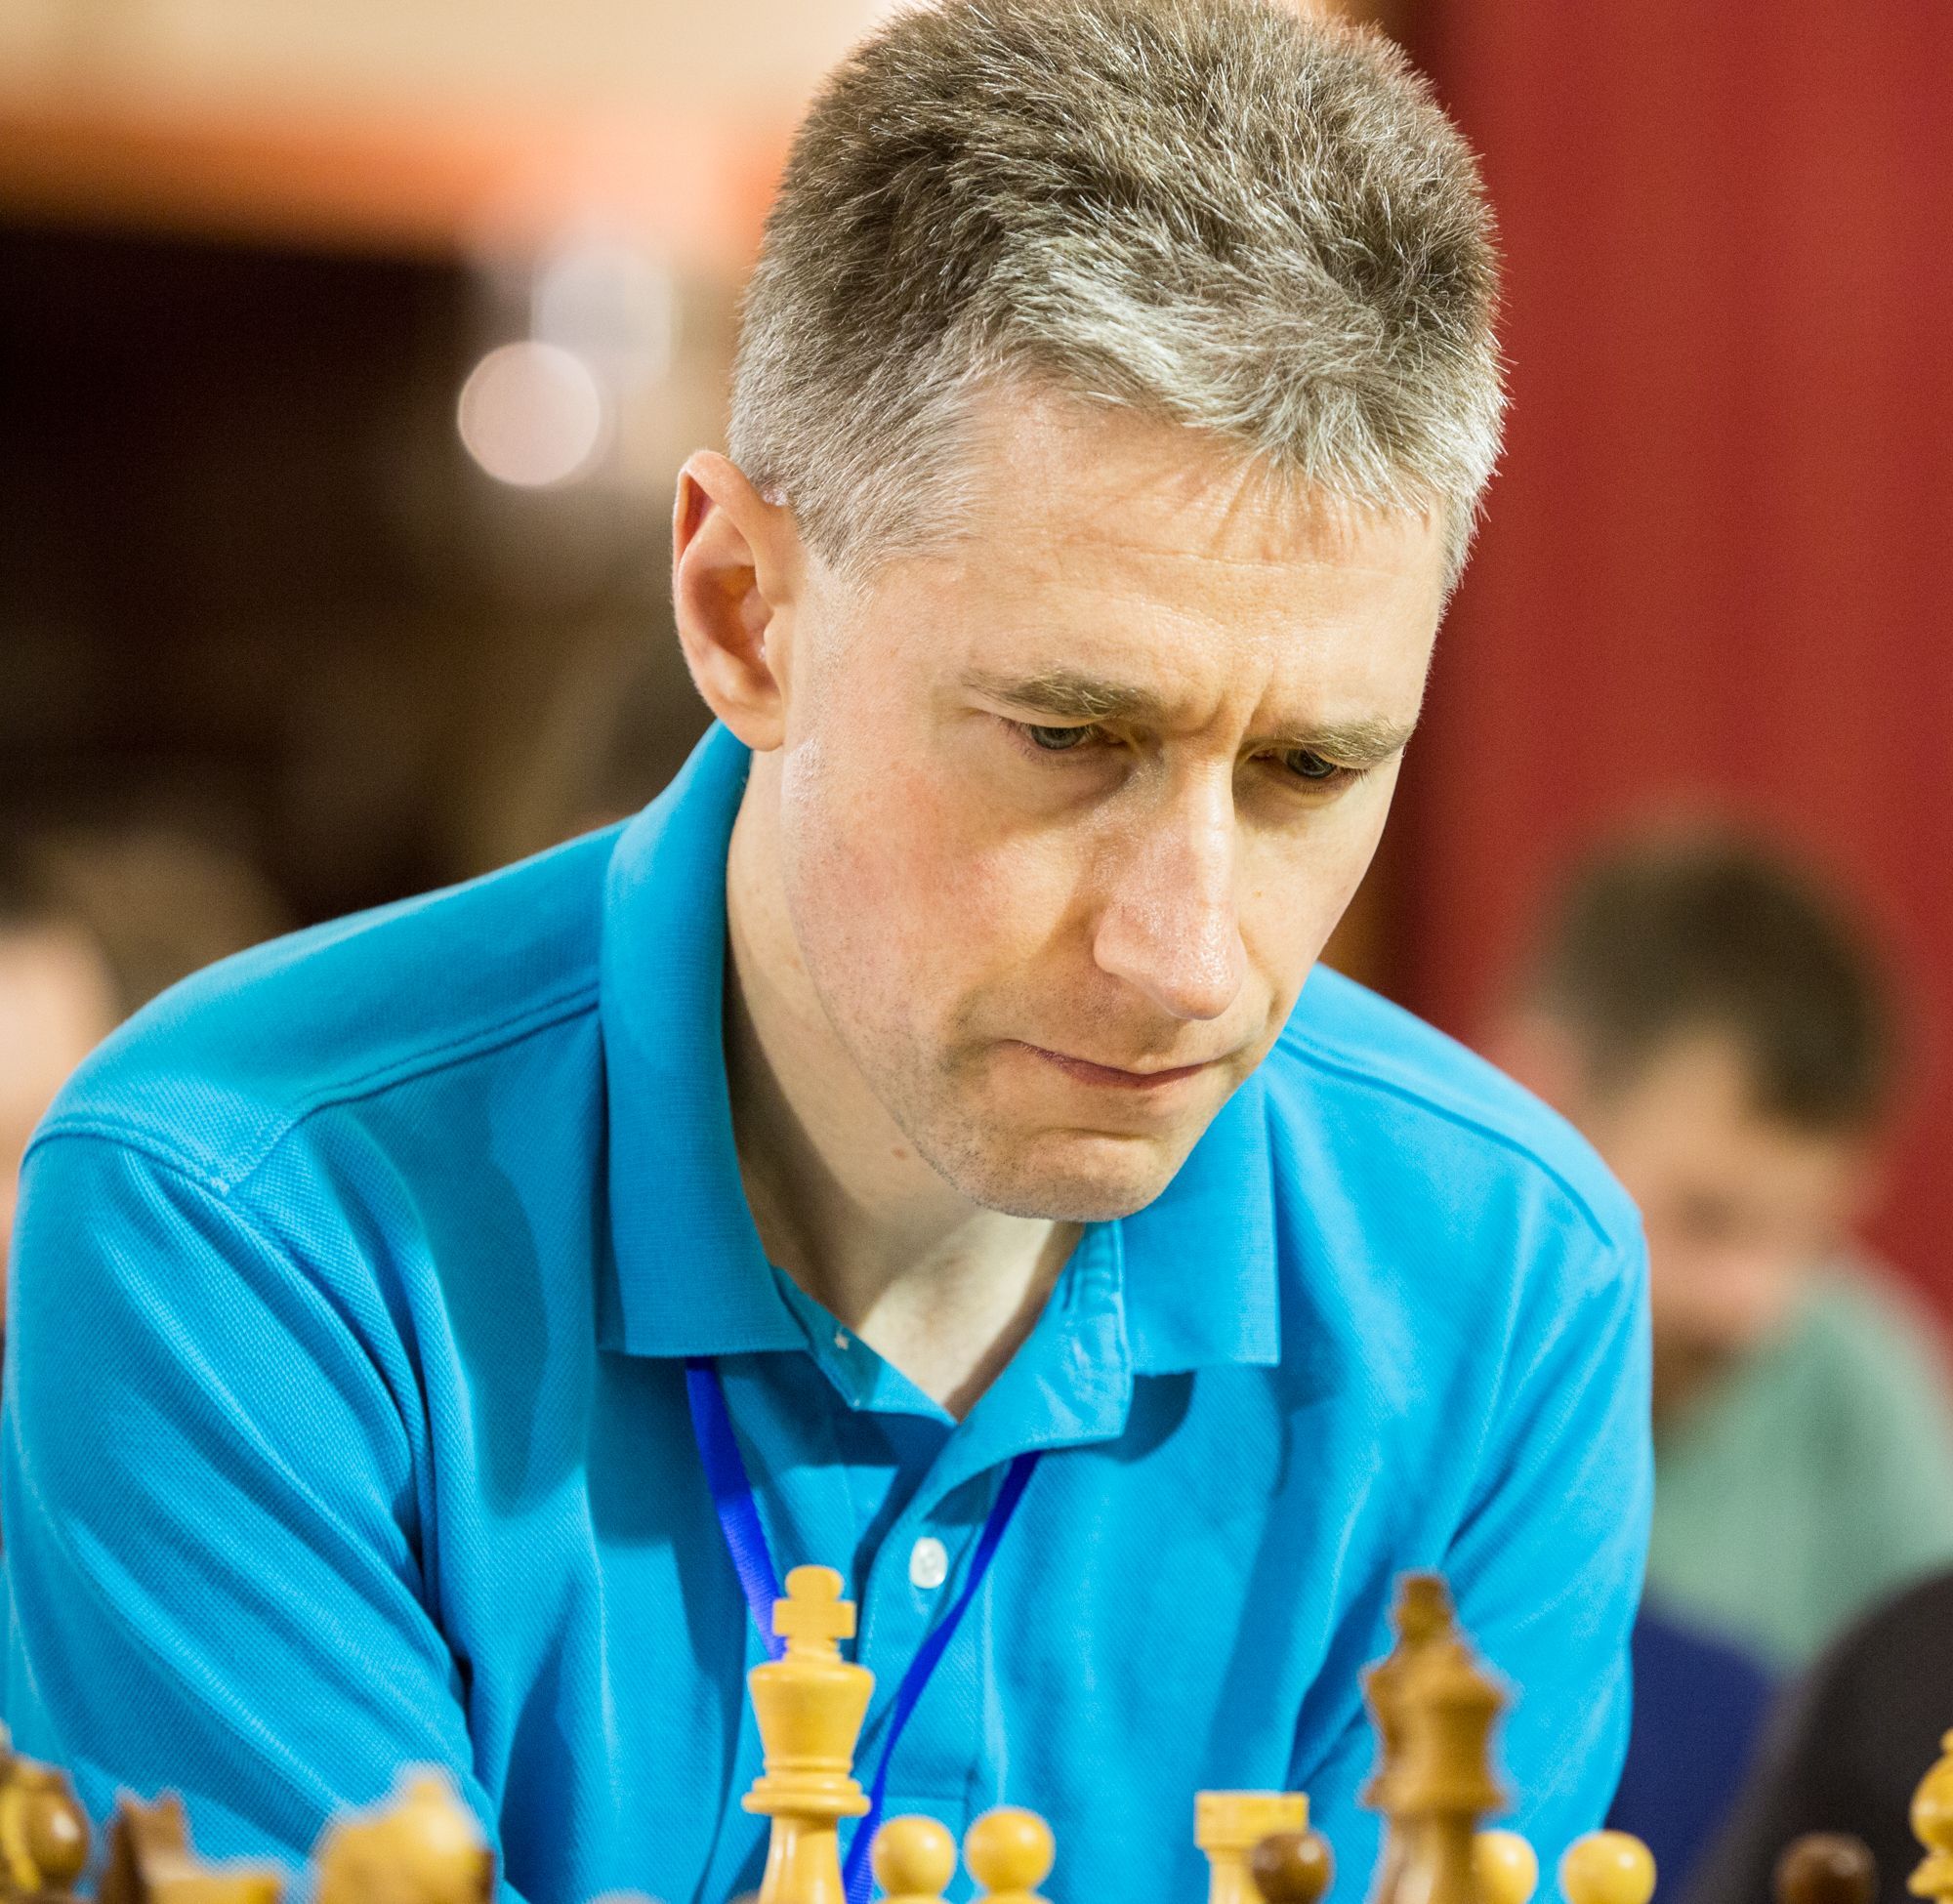 Chess: Michael Adams wins eighth British title at 51 as young guns fall  short